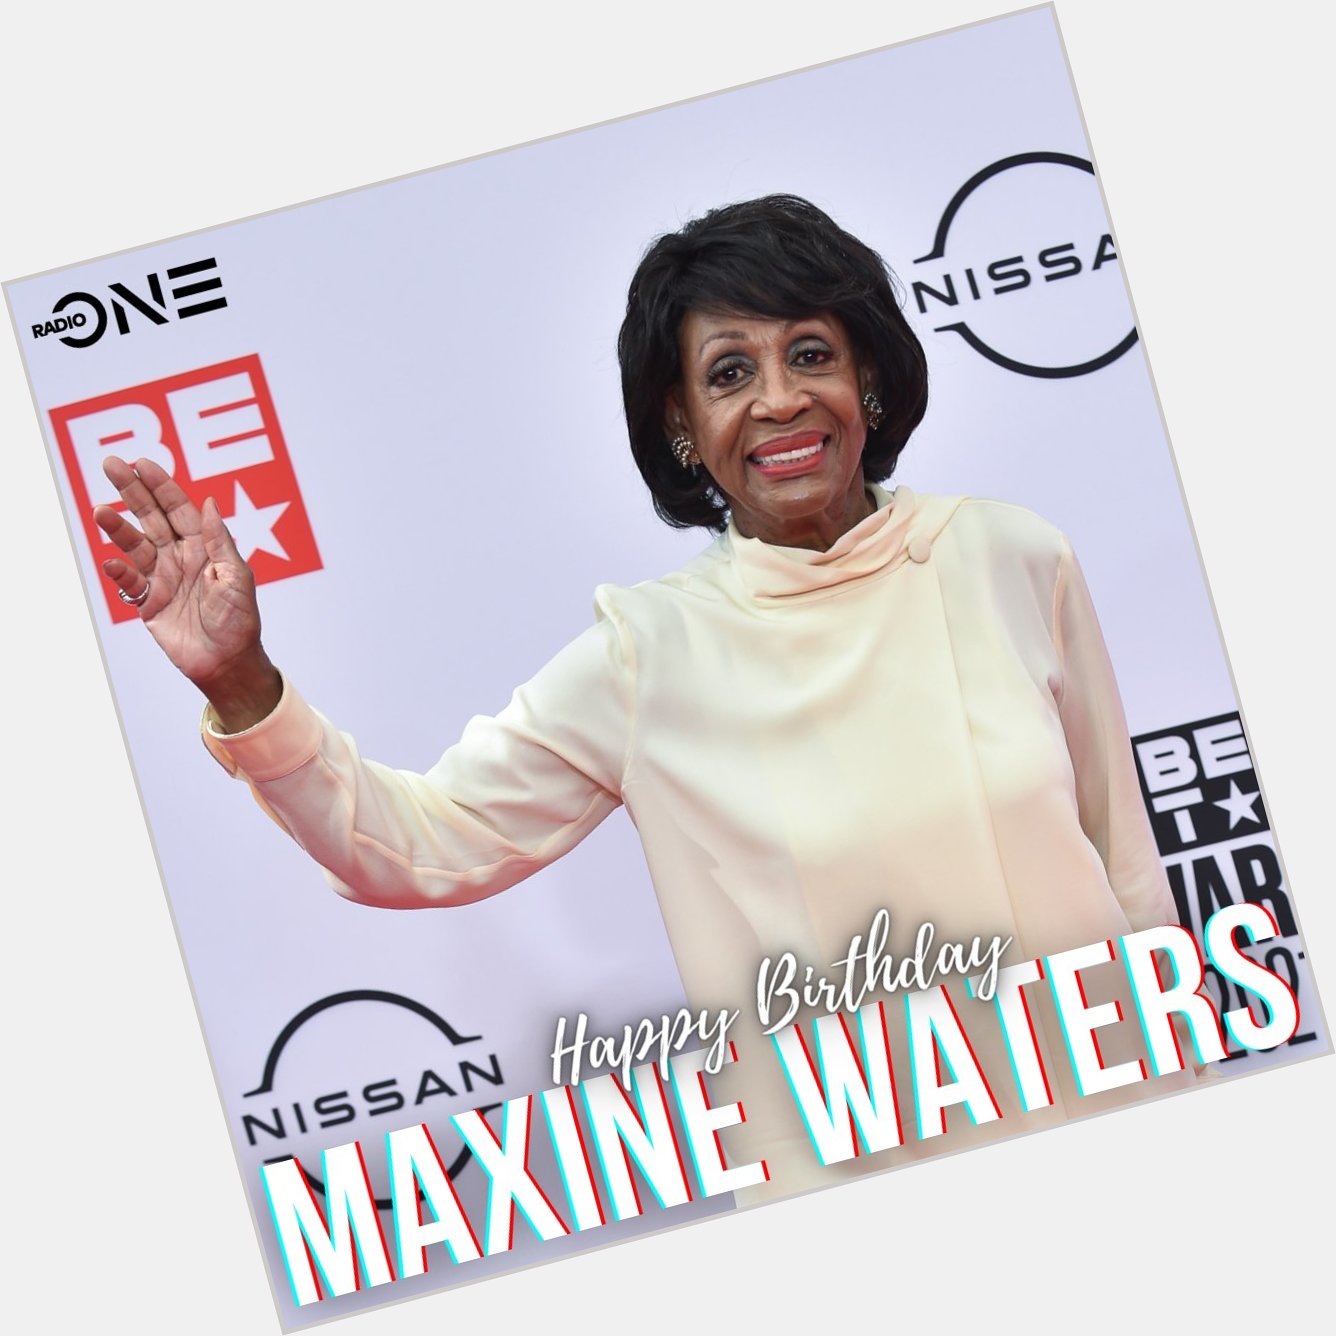 Happy birthday to Congresswoman Maxine Waters!  